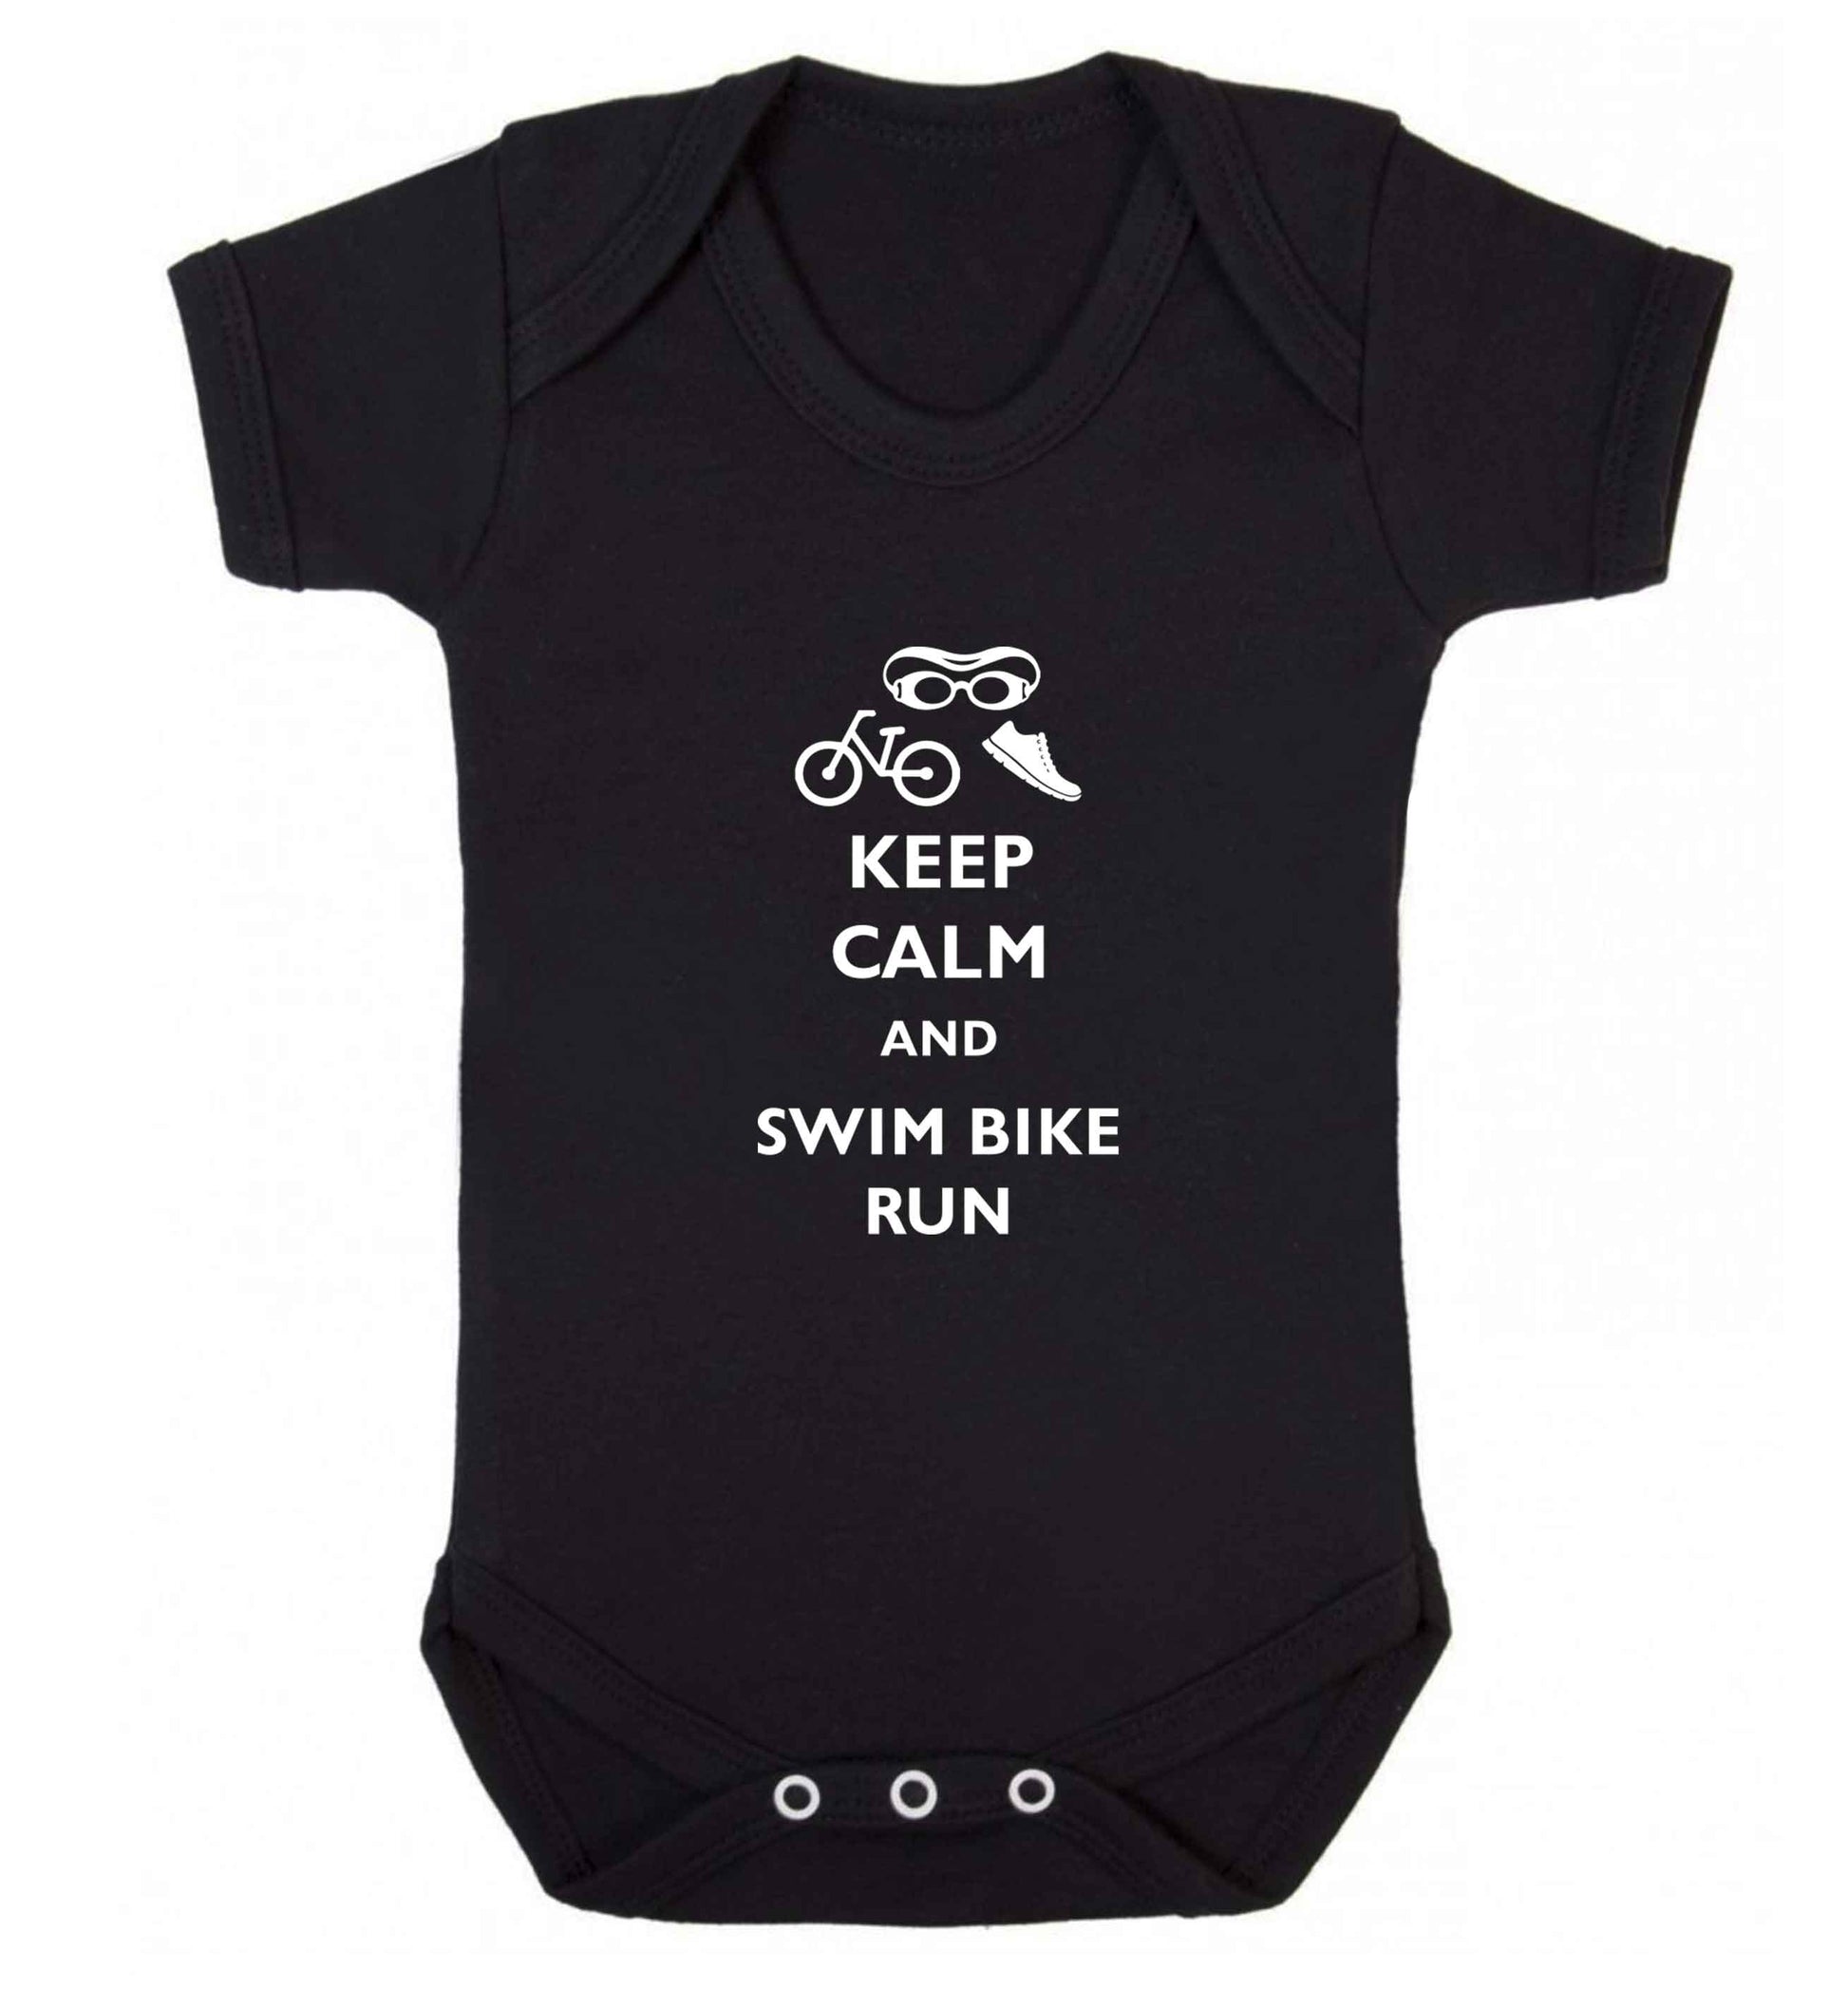 Keep calm and swim bike run baby vest black 18-24 months